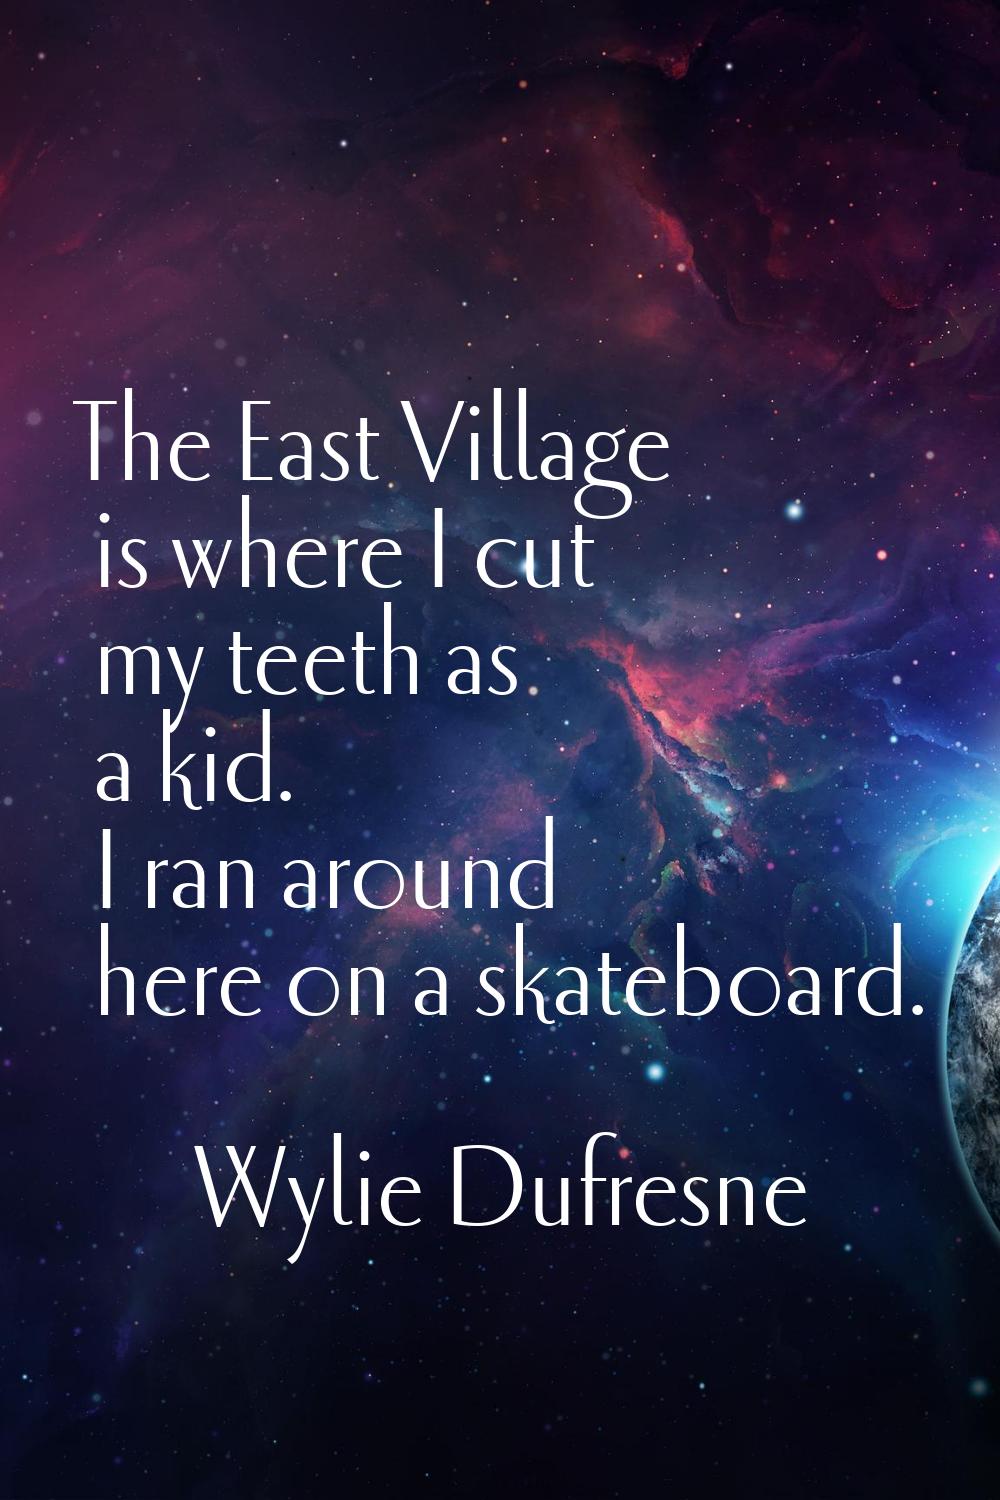 The East Village is where I cut my teeth as a kid. I ran around here on a skateboard.